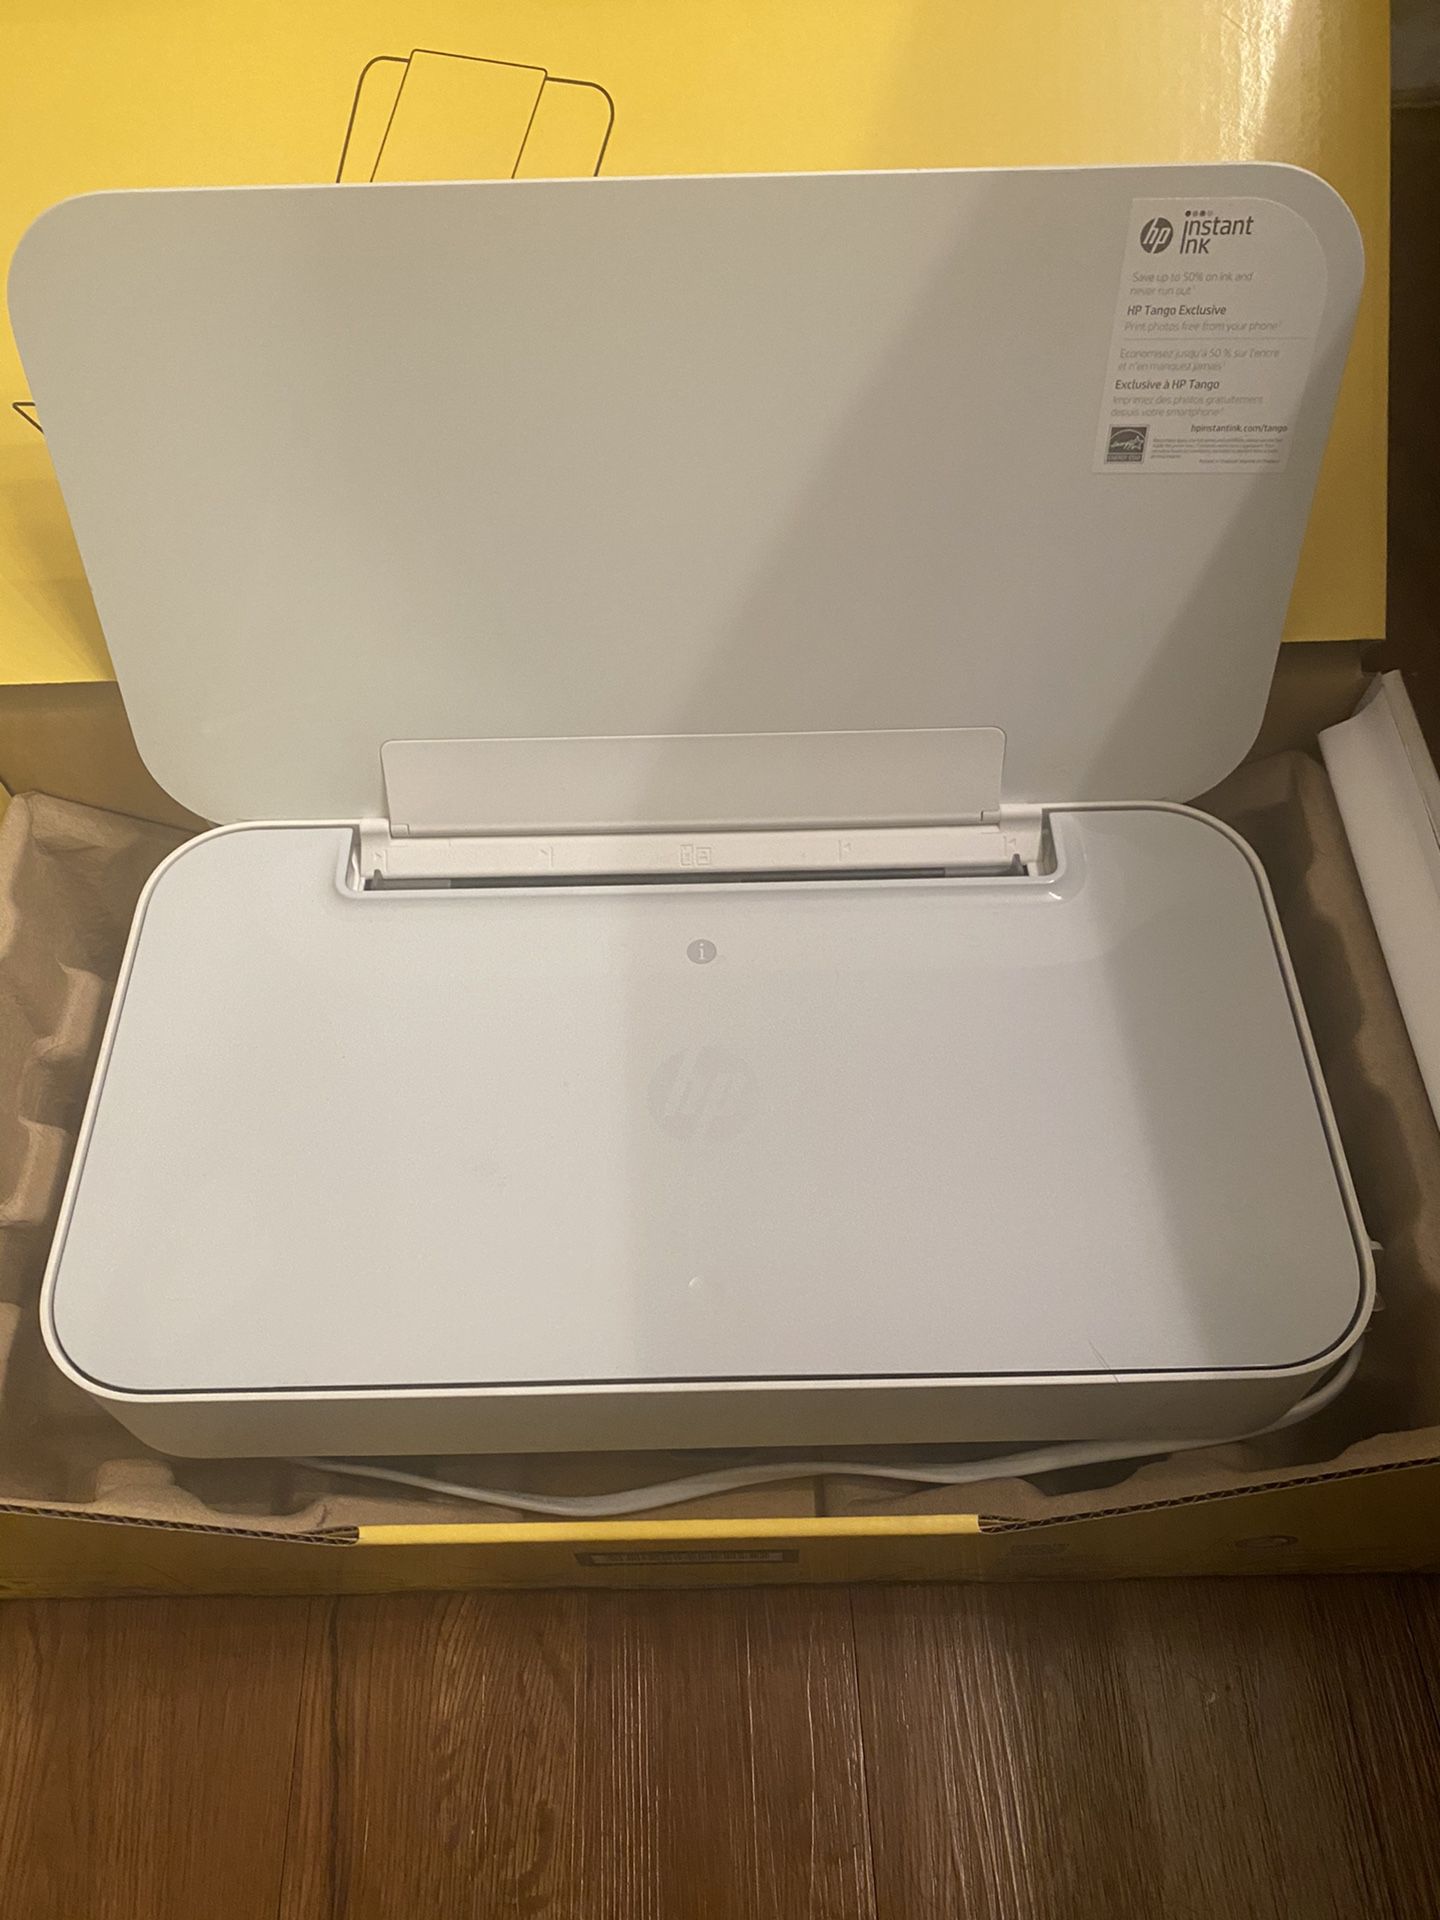 Brand New HP Printer!!!!! White $90